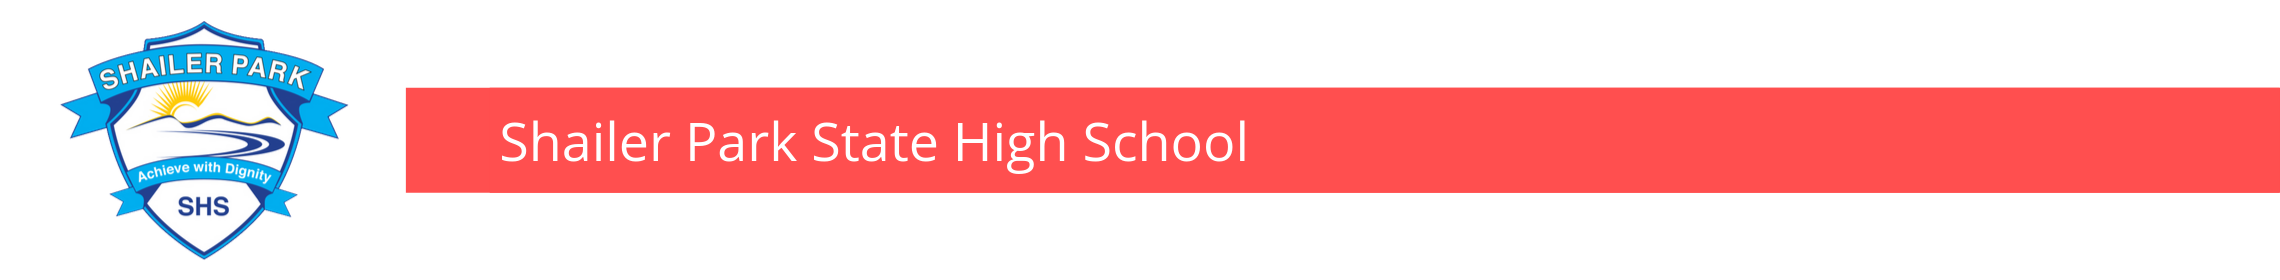 Shailer Park State High School Banner